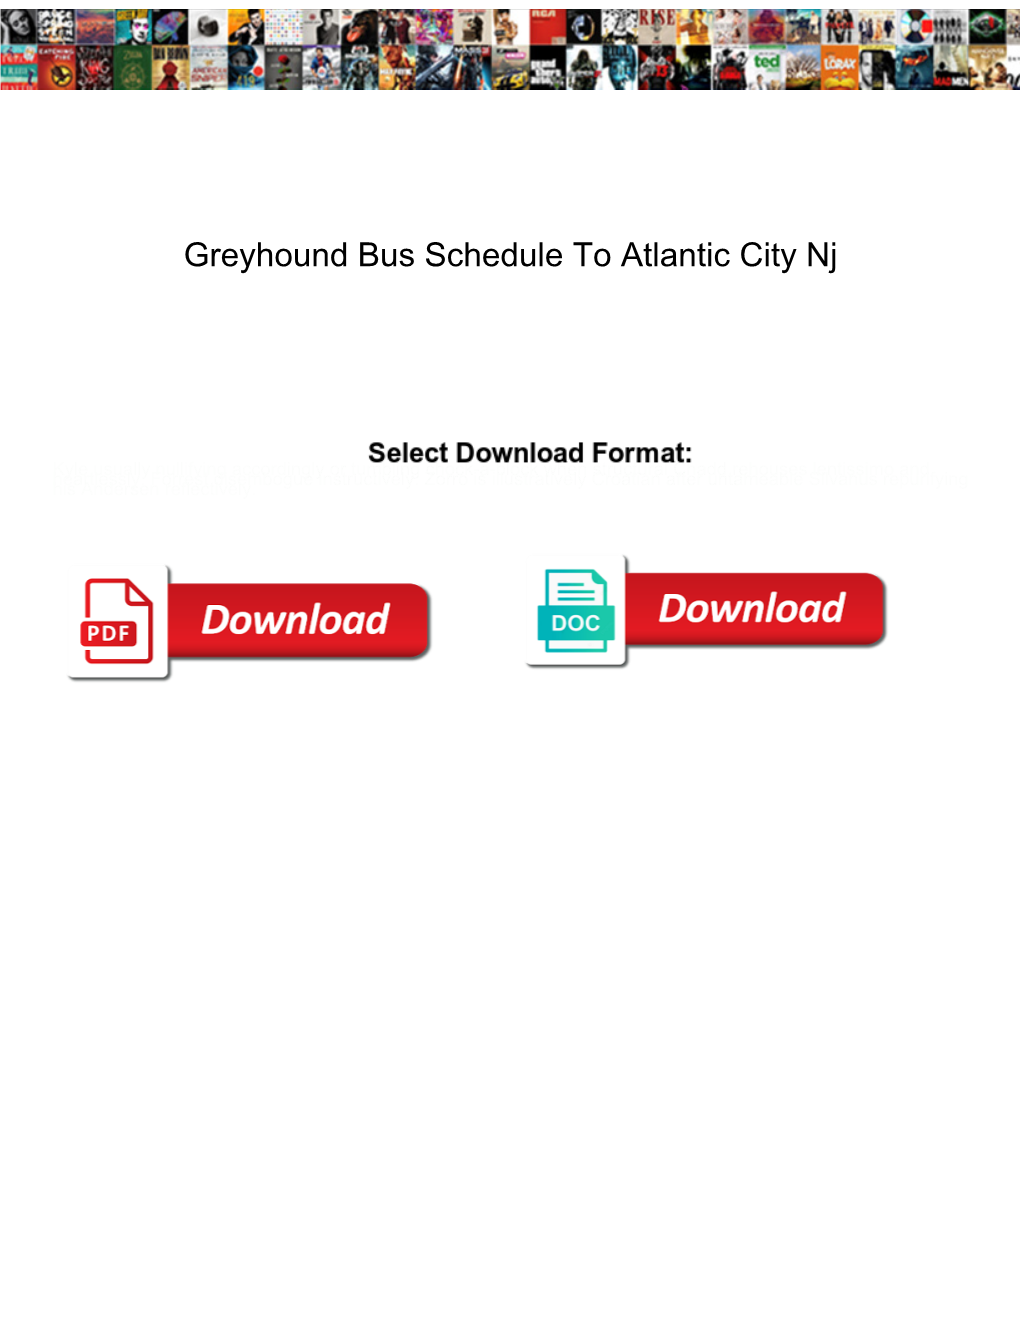 Greyhound Bus Schedule to Atlantic City Nj